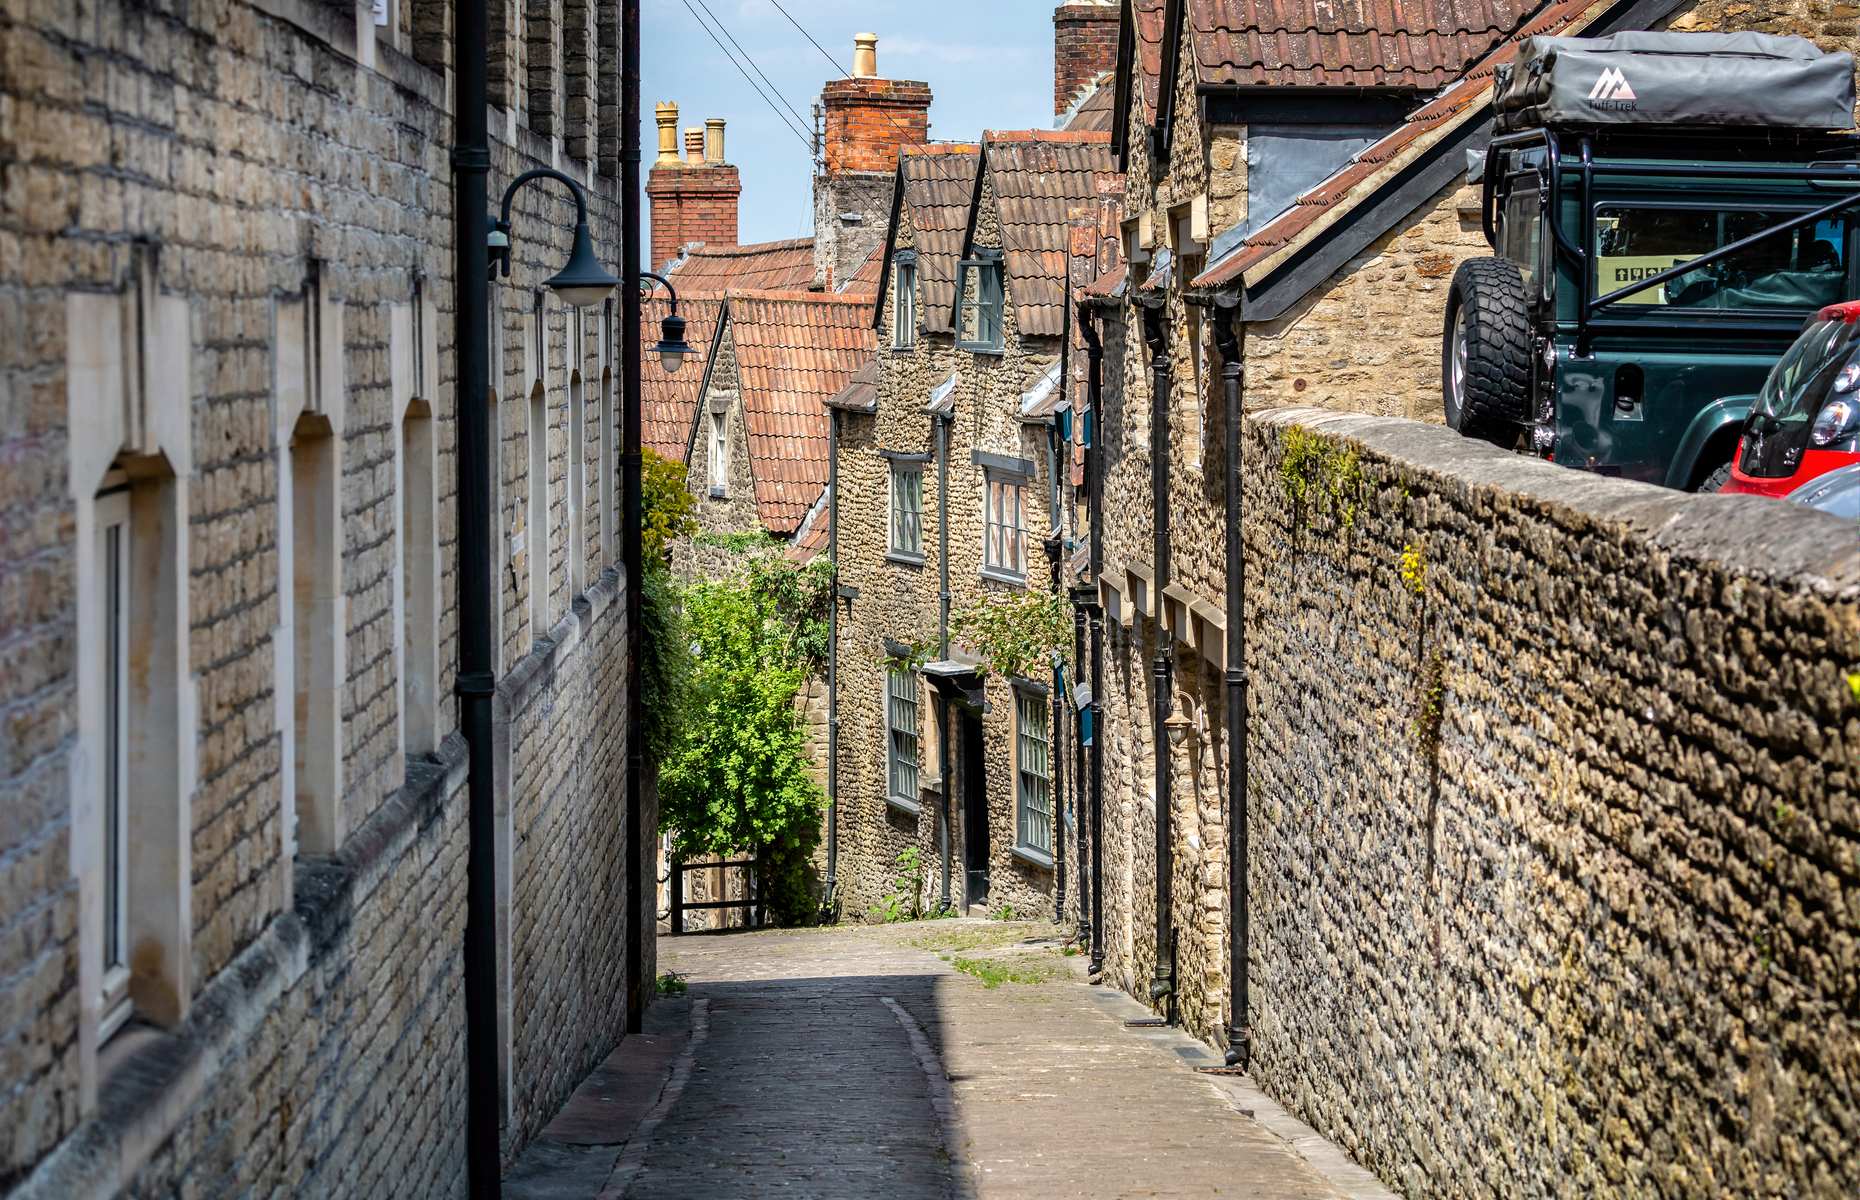 Street in Frome (Image: Nigel Jarvis/Shutterstock)